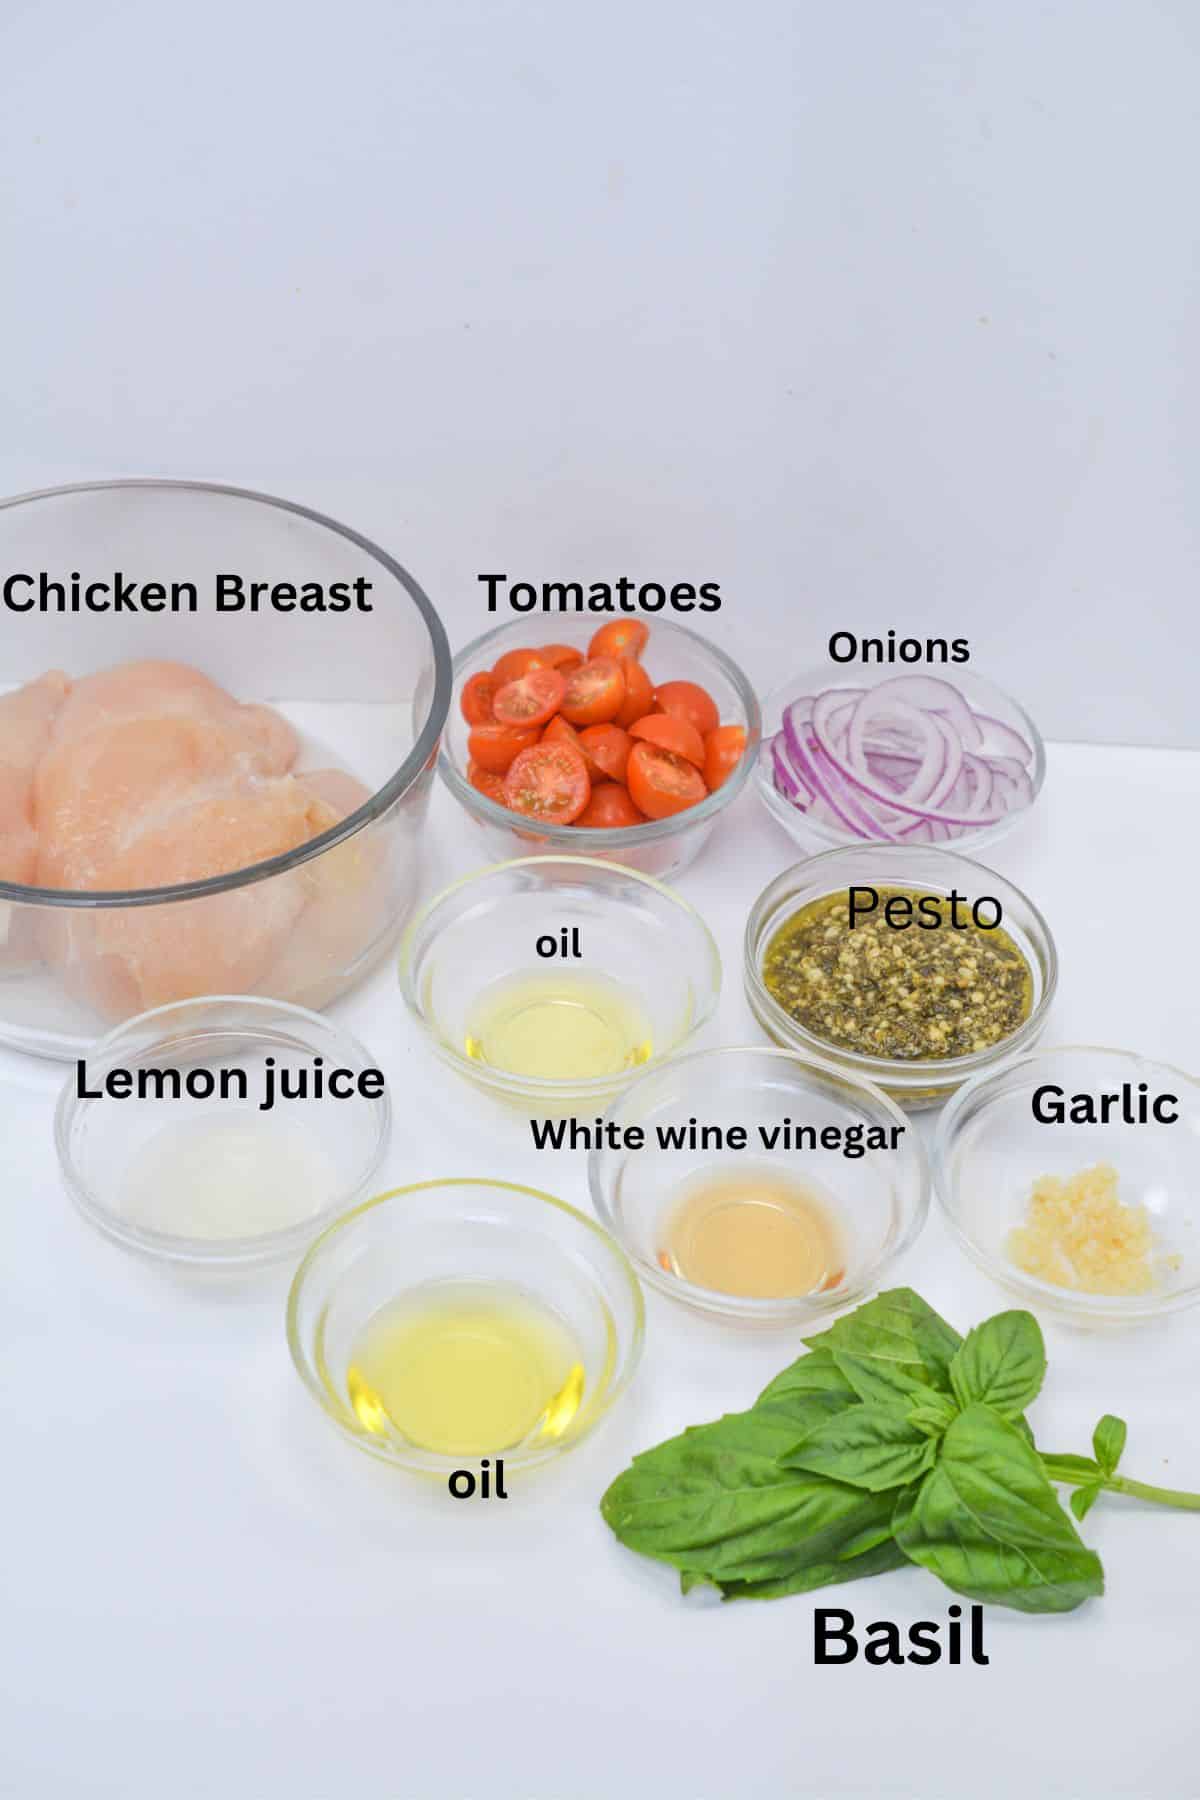 chicken, tomatoes, onion, oil, lemon juice, pesto, viniger, garlic, basil